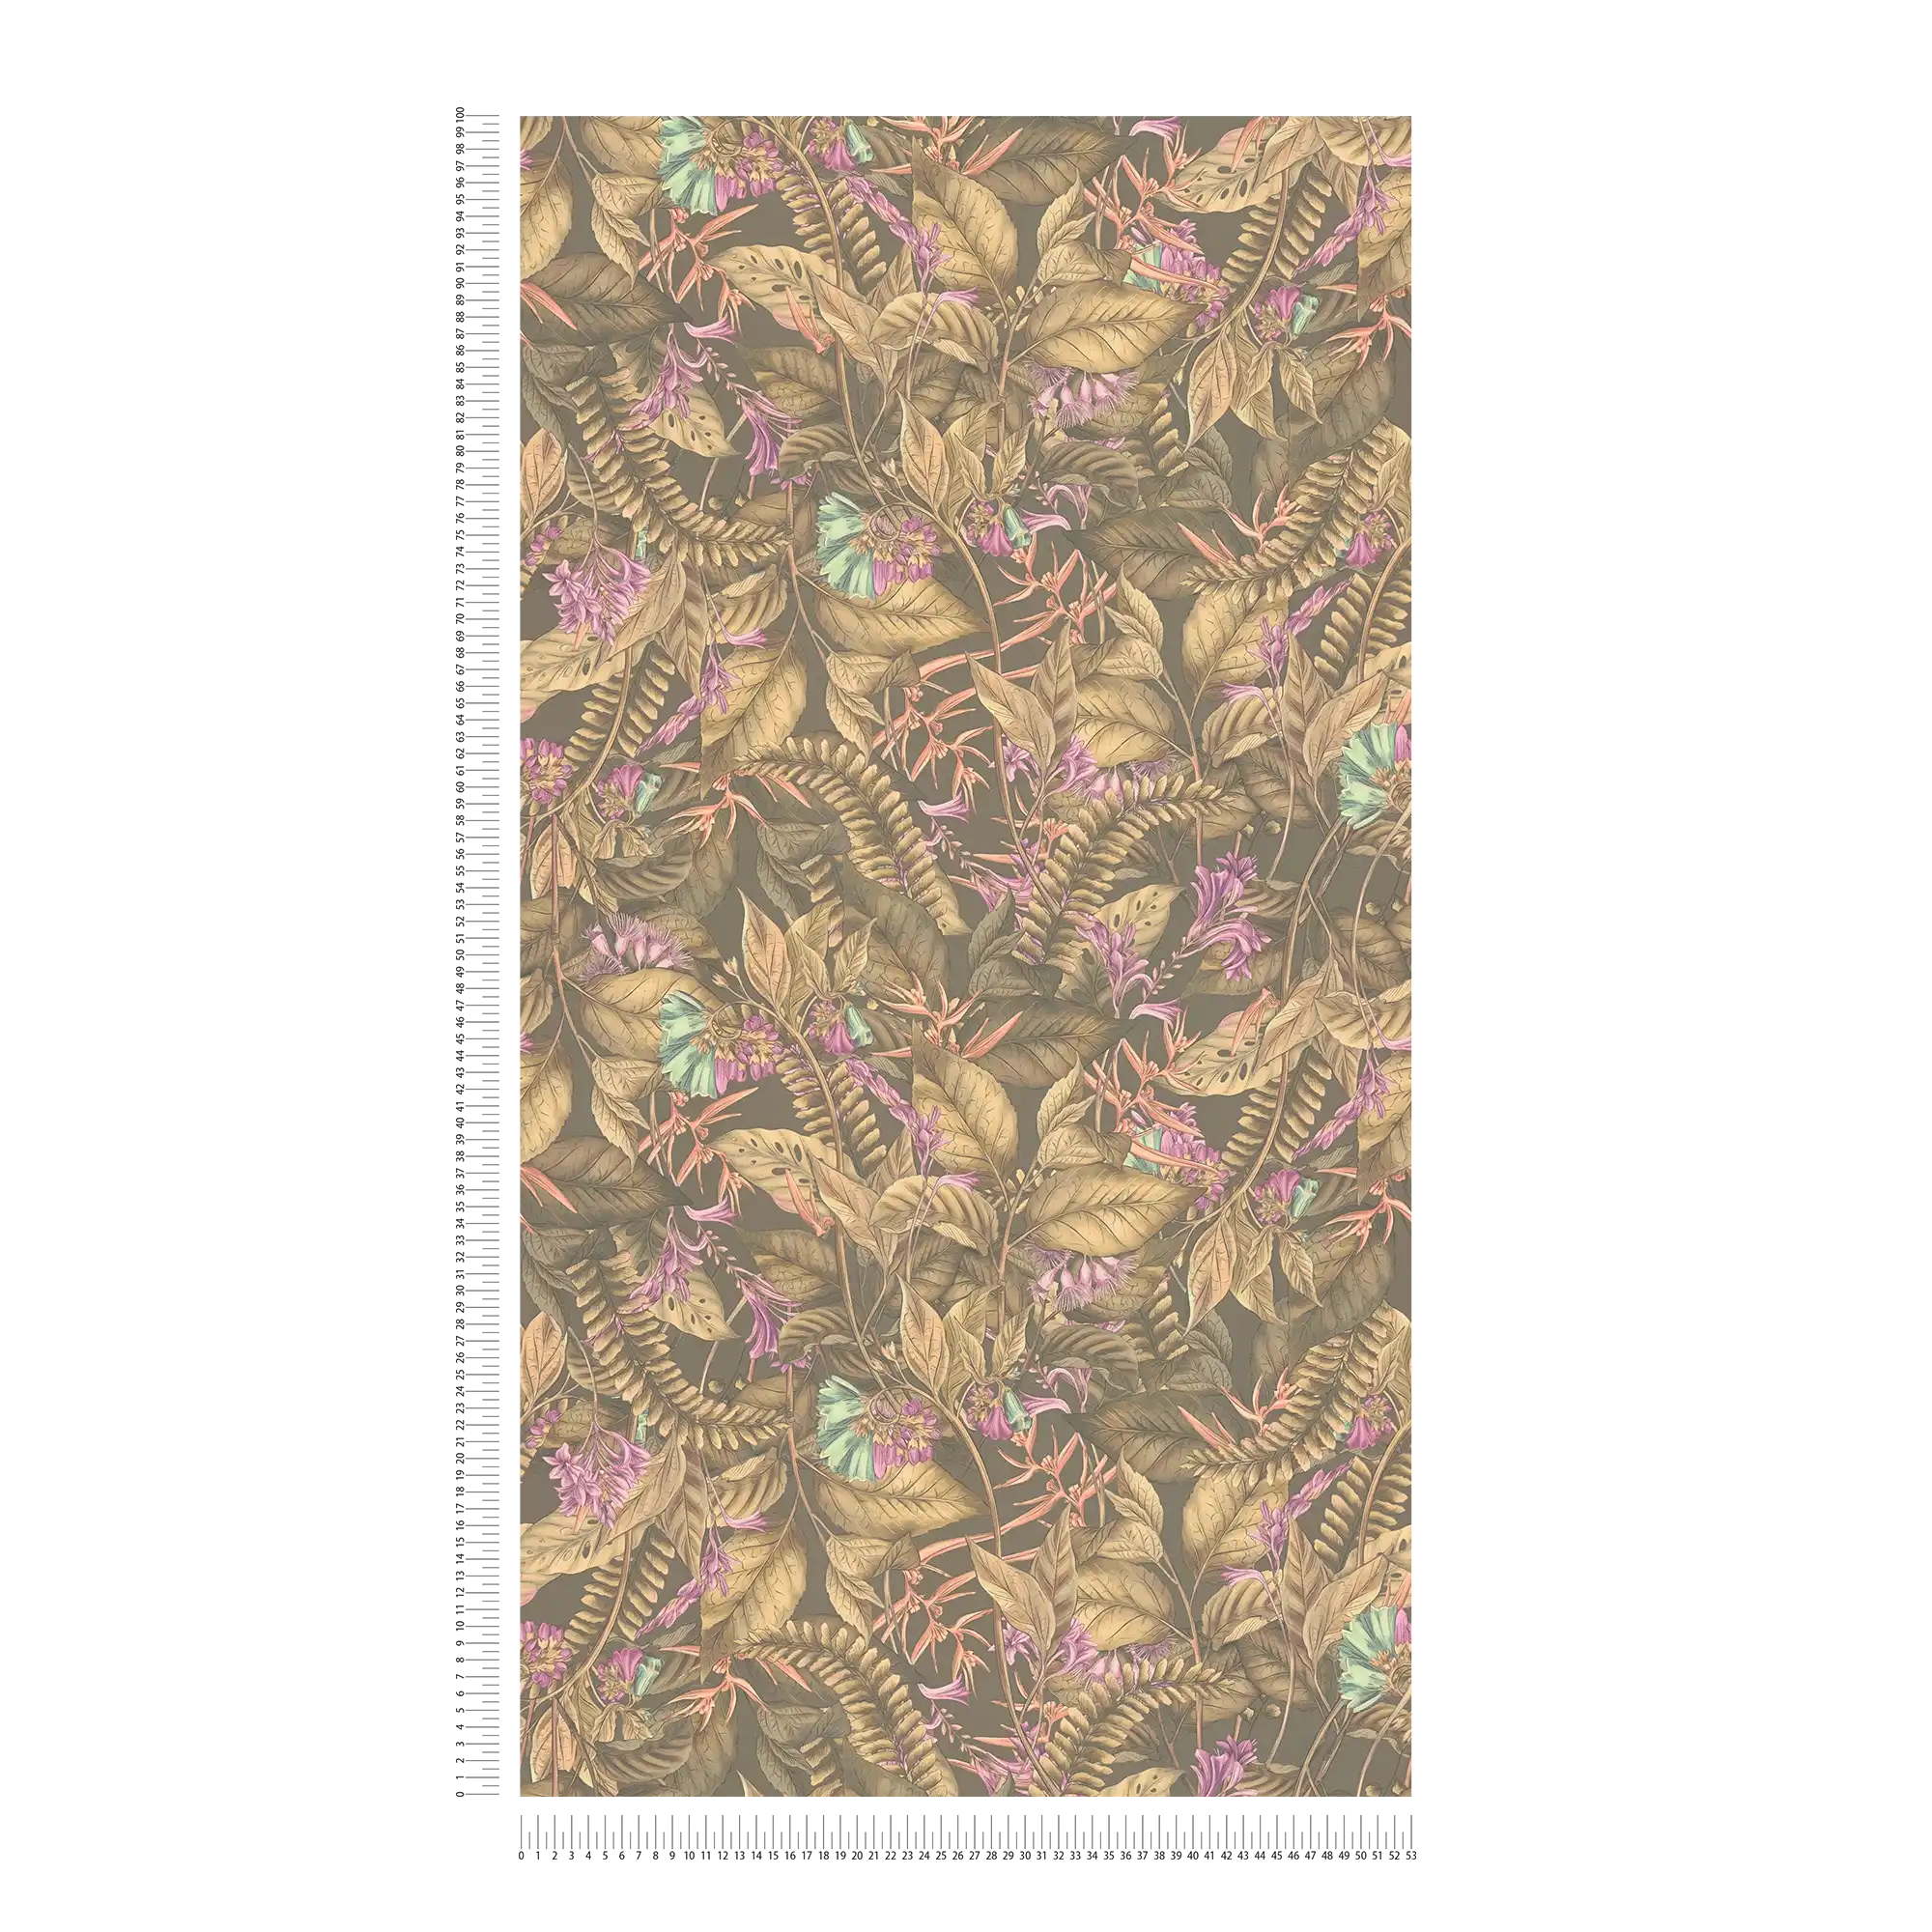             Floral wallpaper with flowers & leaves textured matt - brown, beige, purple
        